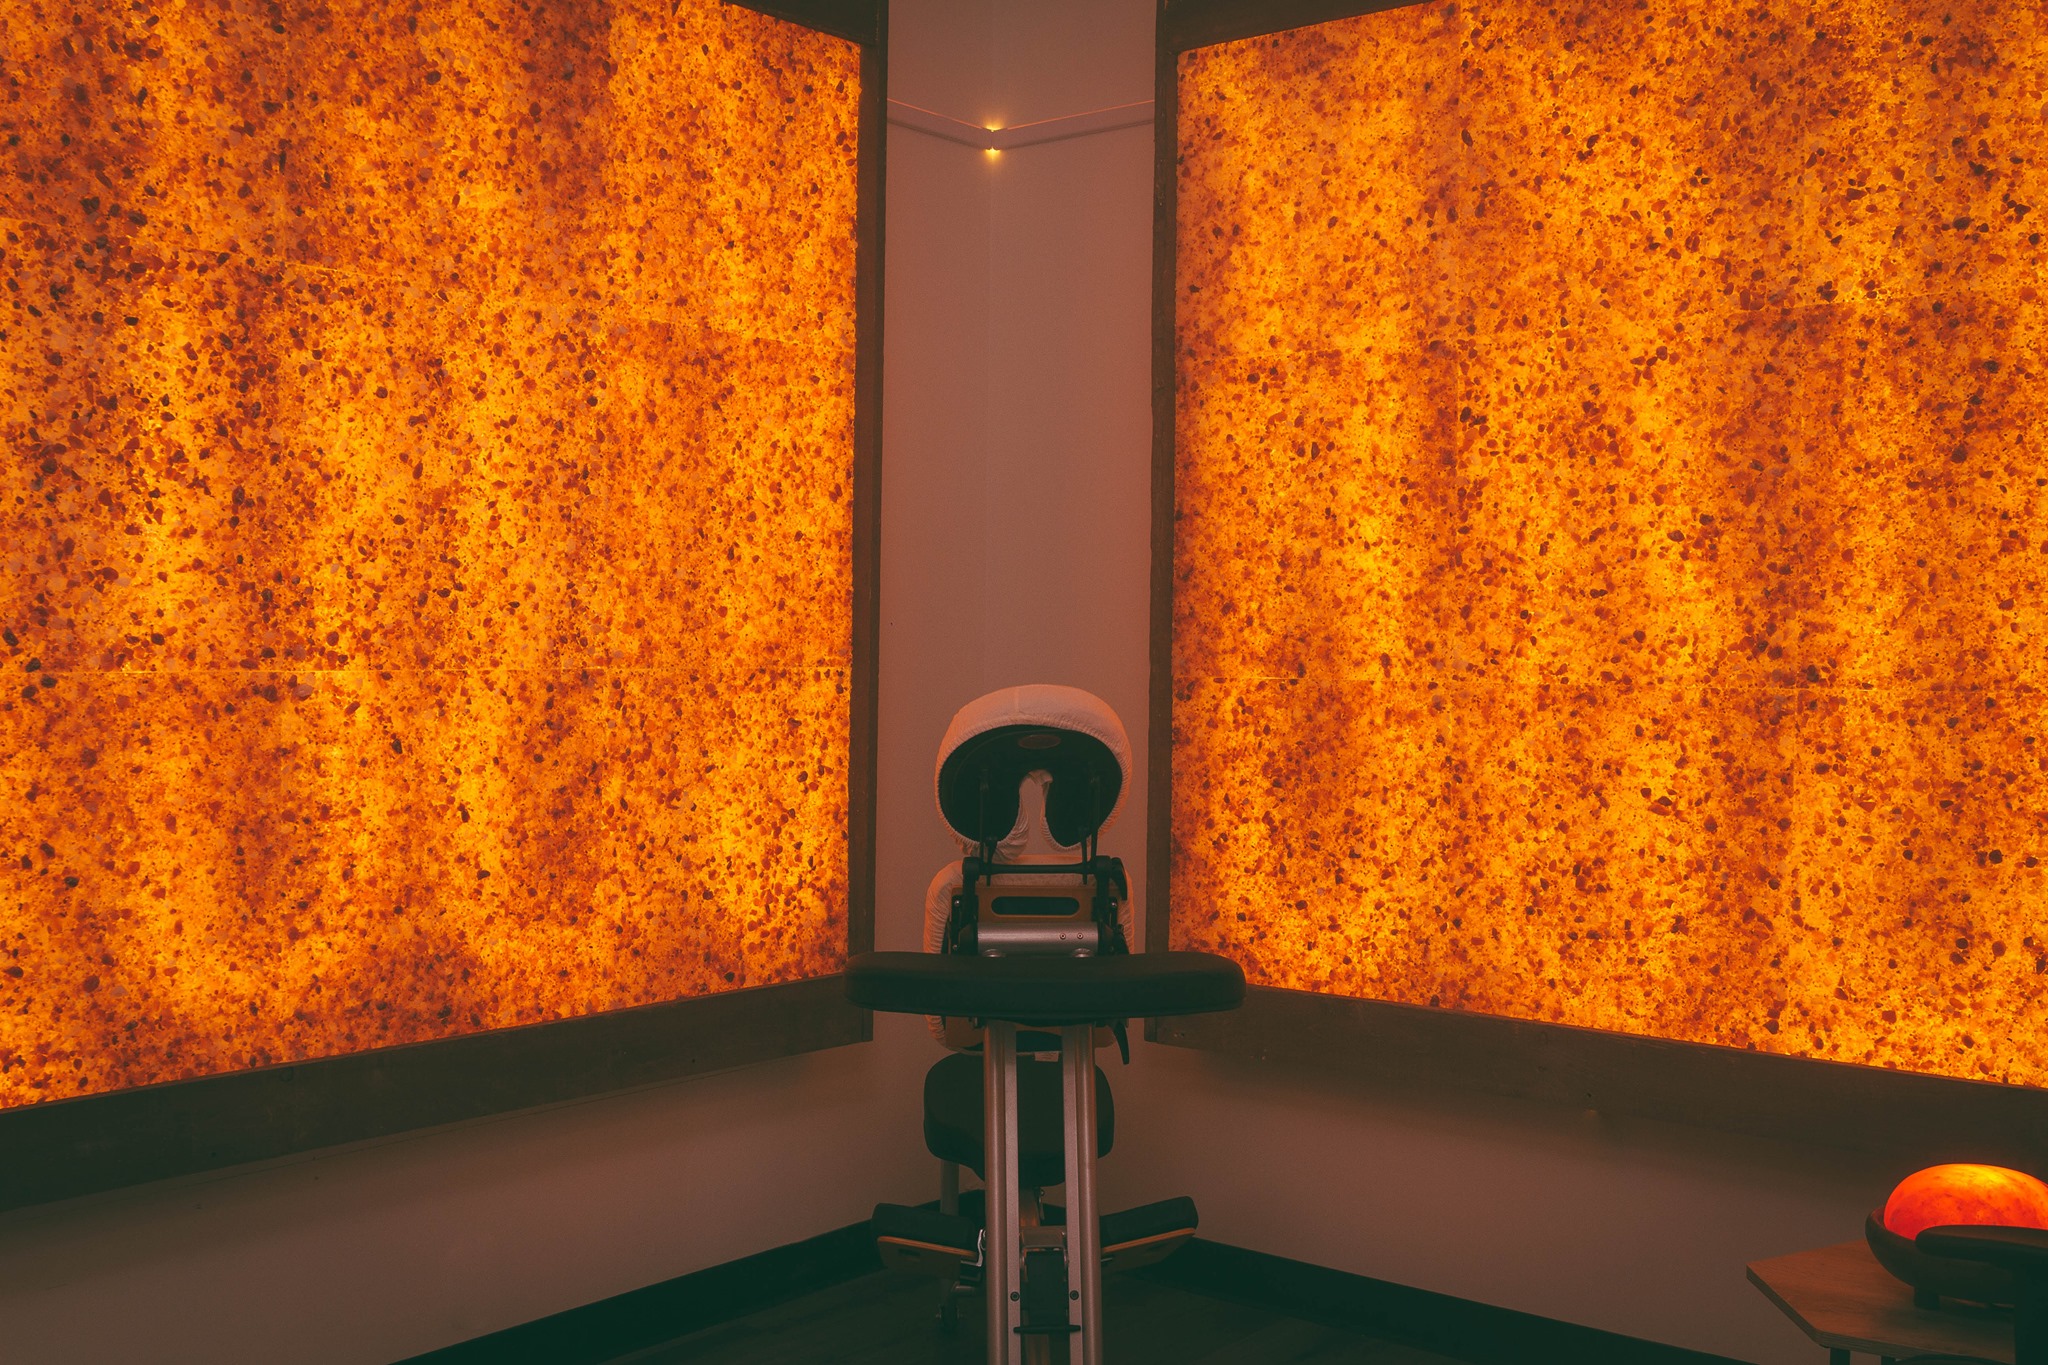 A Massage Chair With Two Large Led Backlit Salt Brick Walls At The Revelations Holistic Center - Dorval, Quebec.